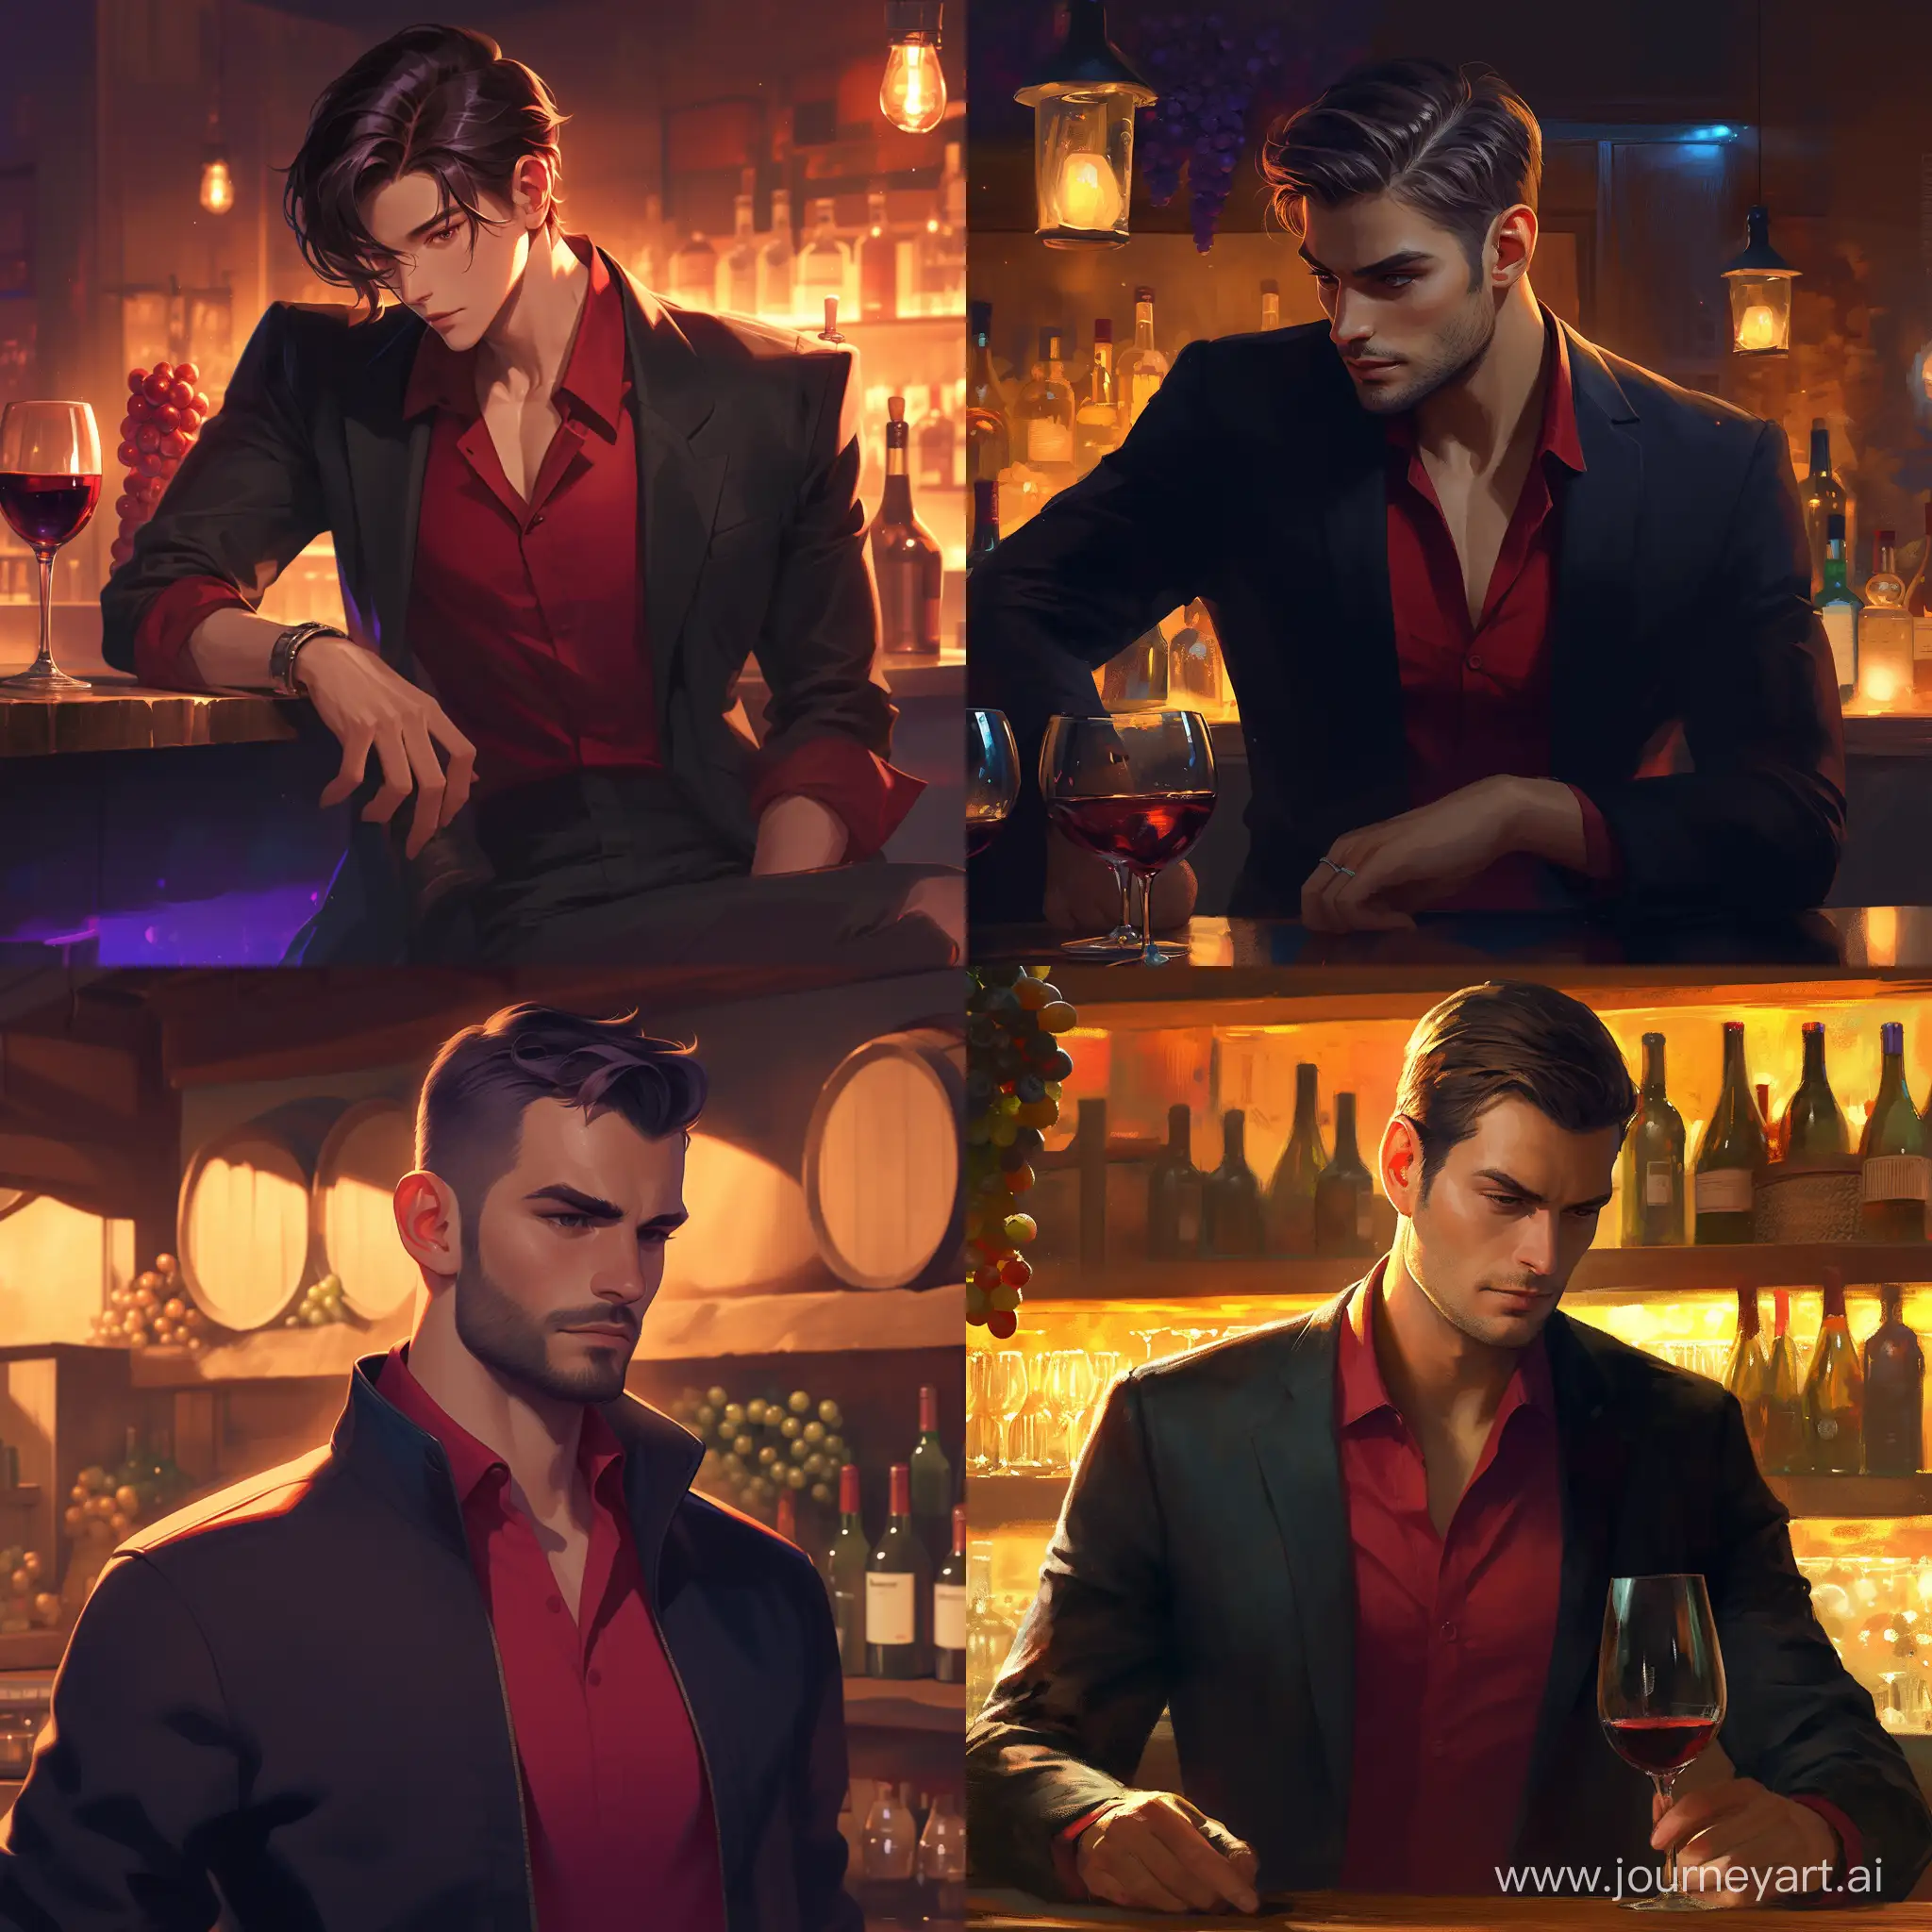 Stylish-Man-Enjoying-Red-Wine-in-a-Sophisticated-Bar-Setting